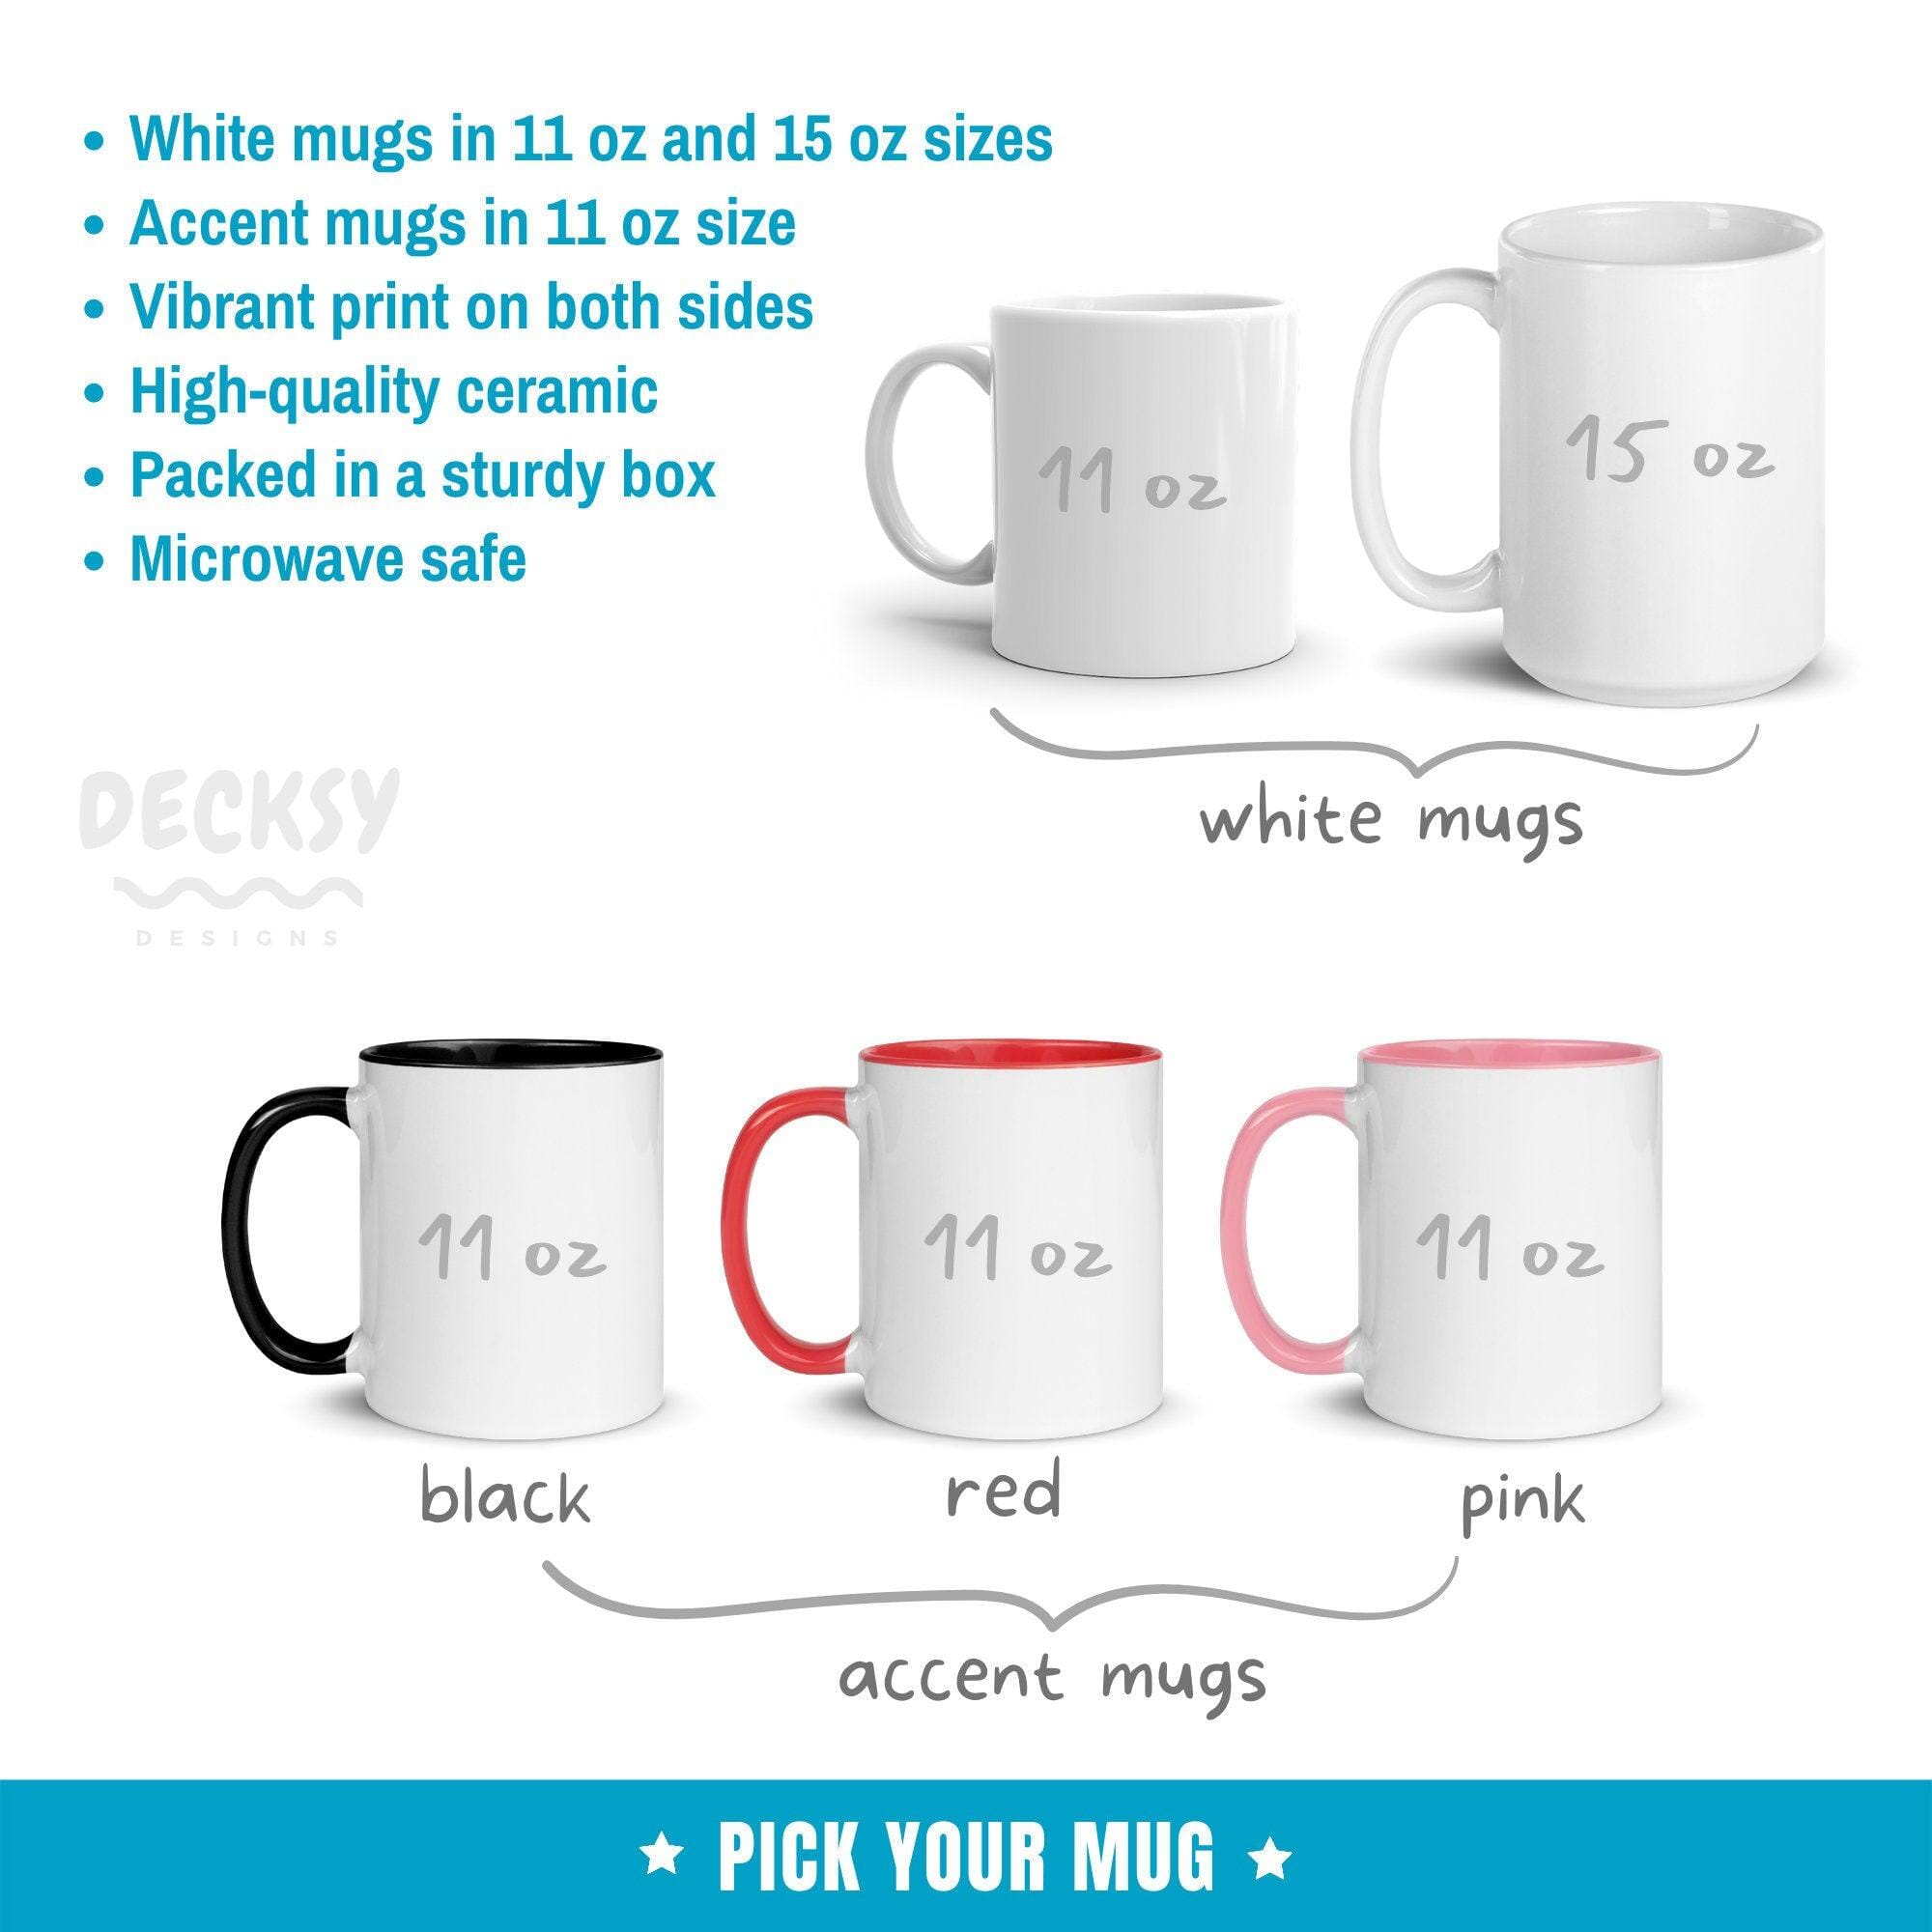 lawyer_nutrition_facts-personalised_coffee_mug-DecksyDesigns